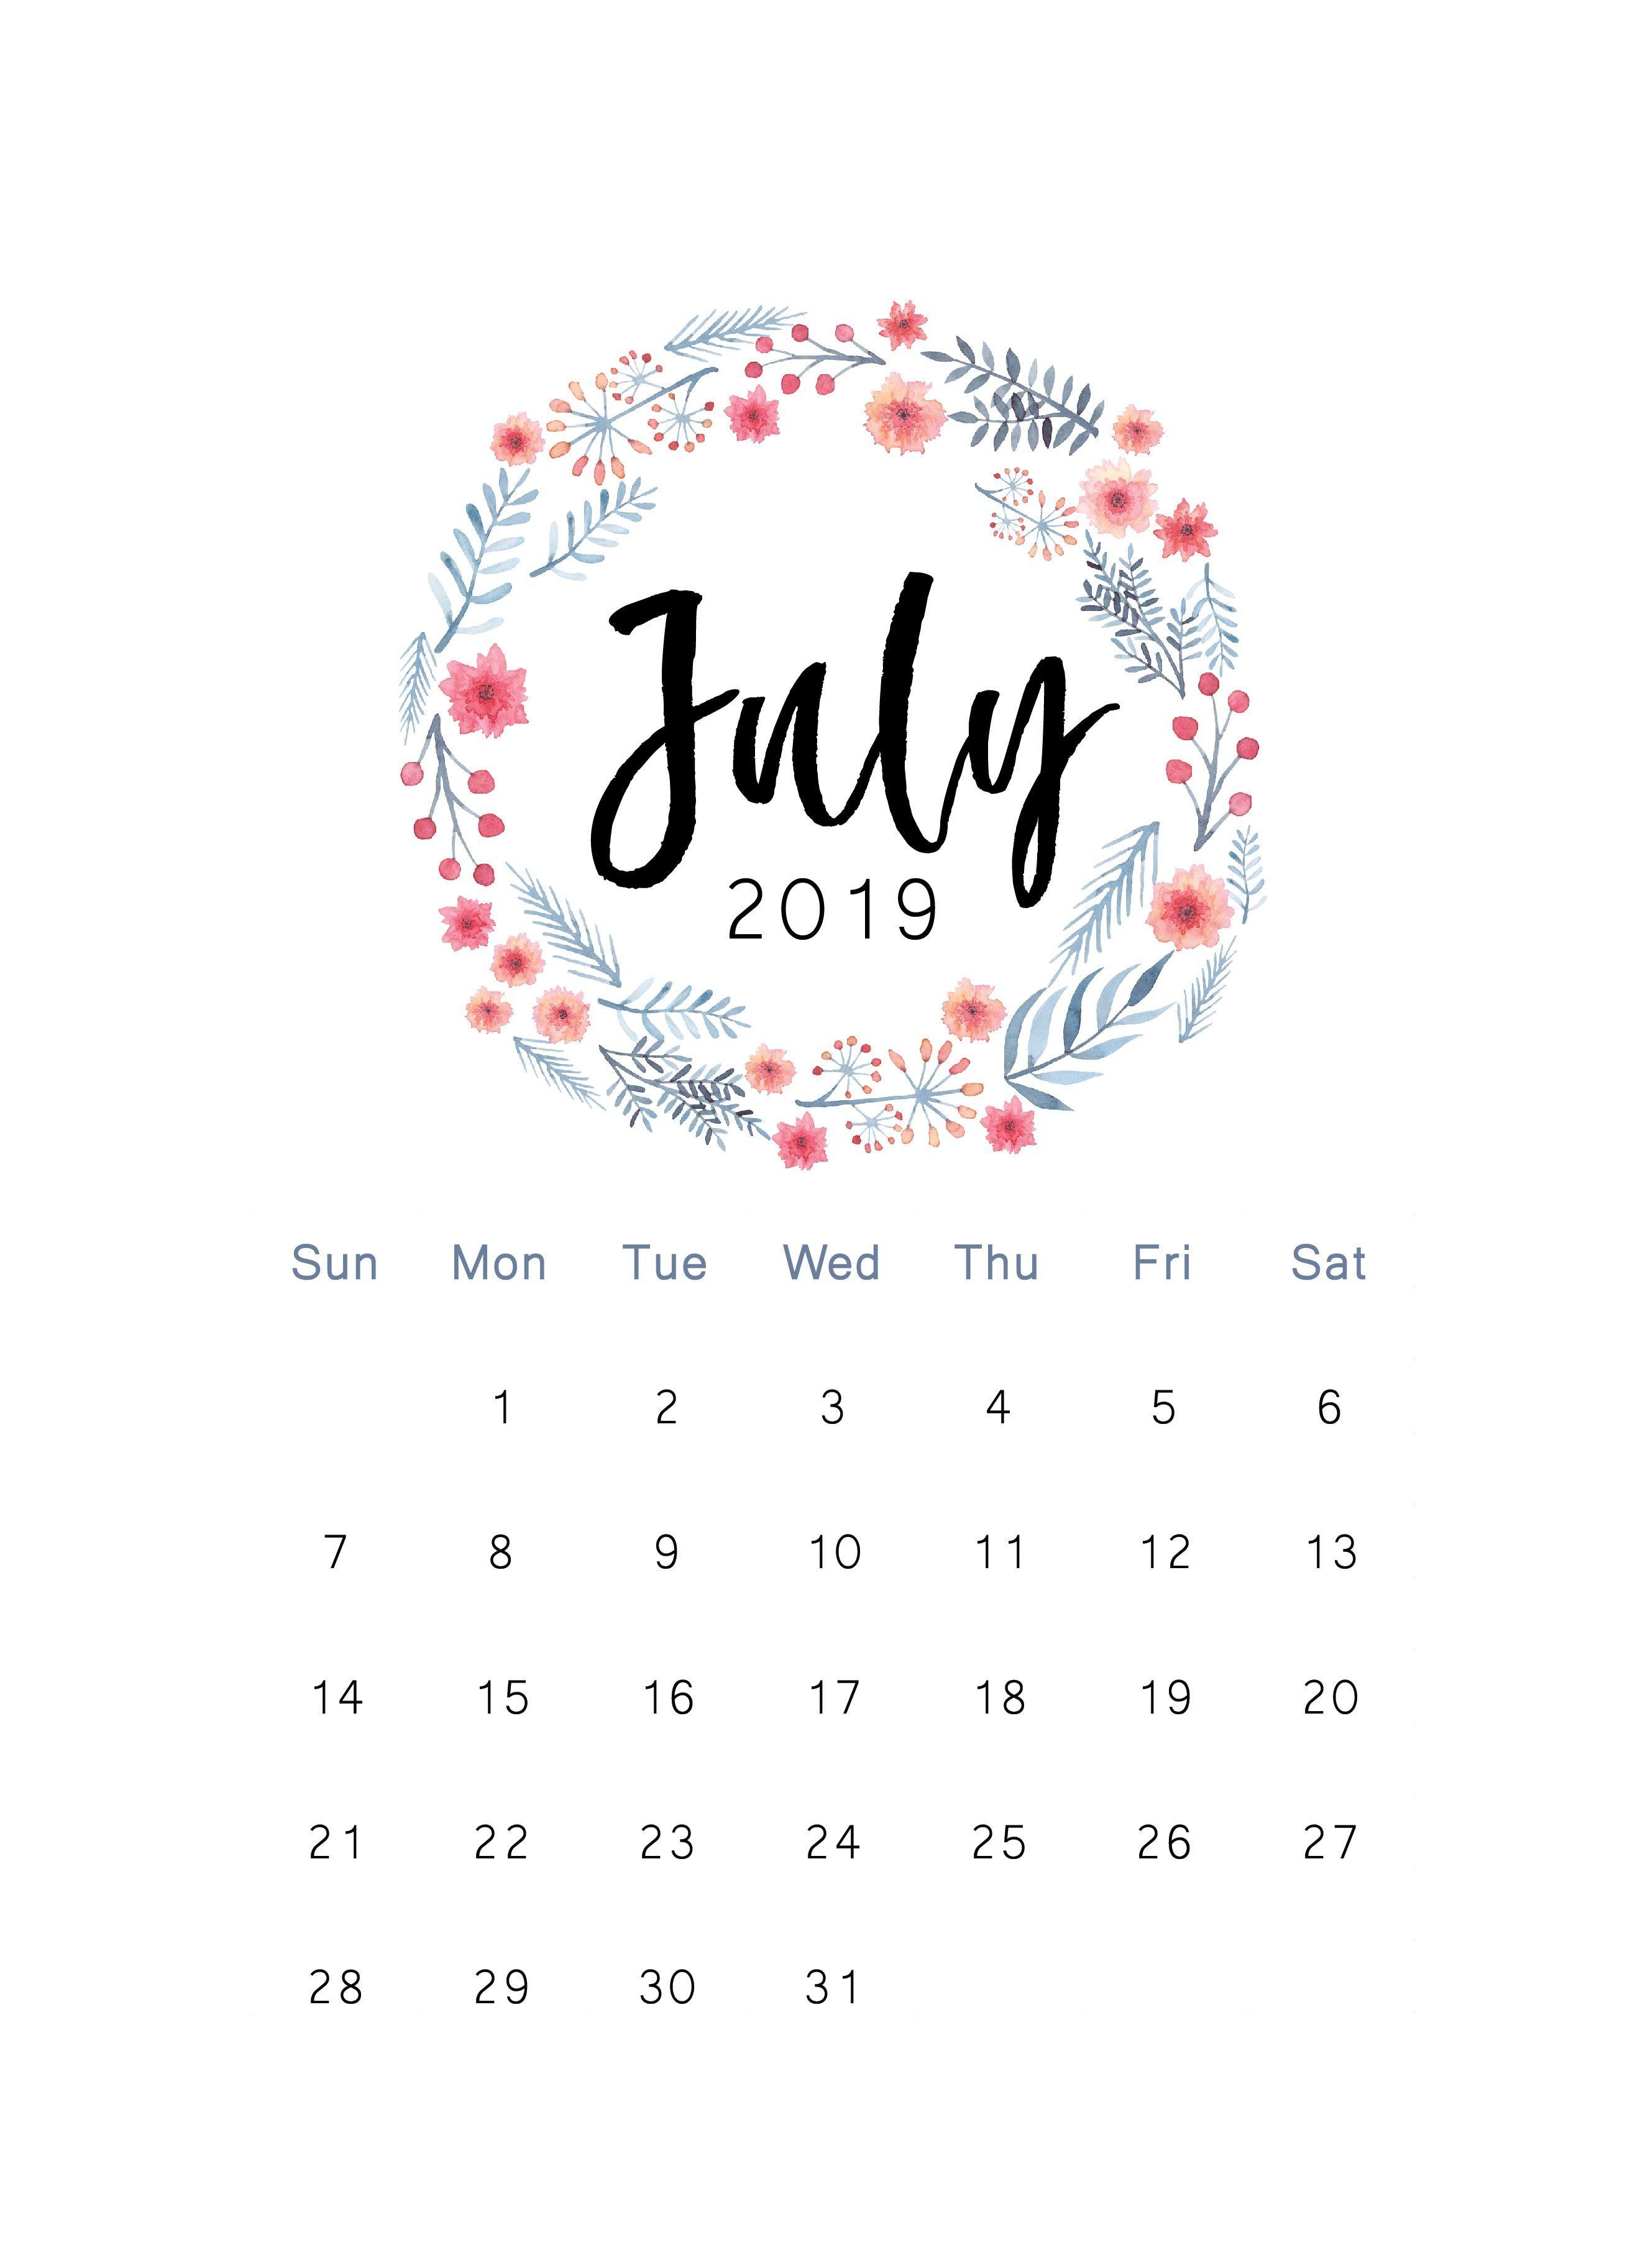 July 2019 Printable Calendar. The Cactus Creative. Calendar, Print